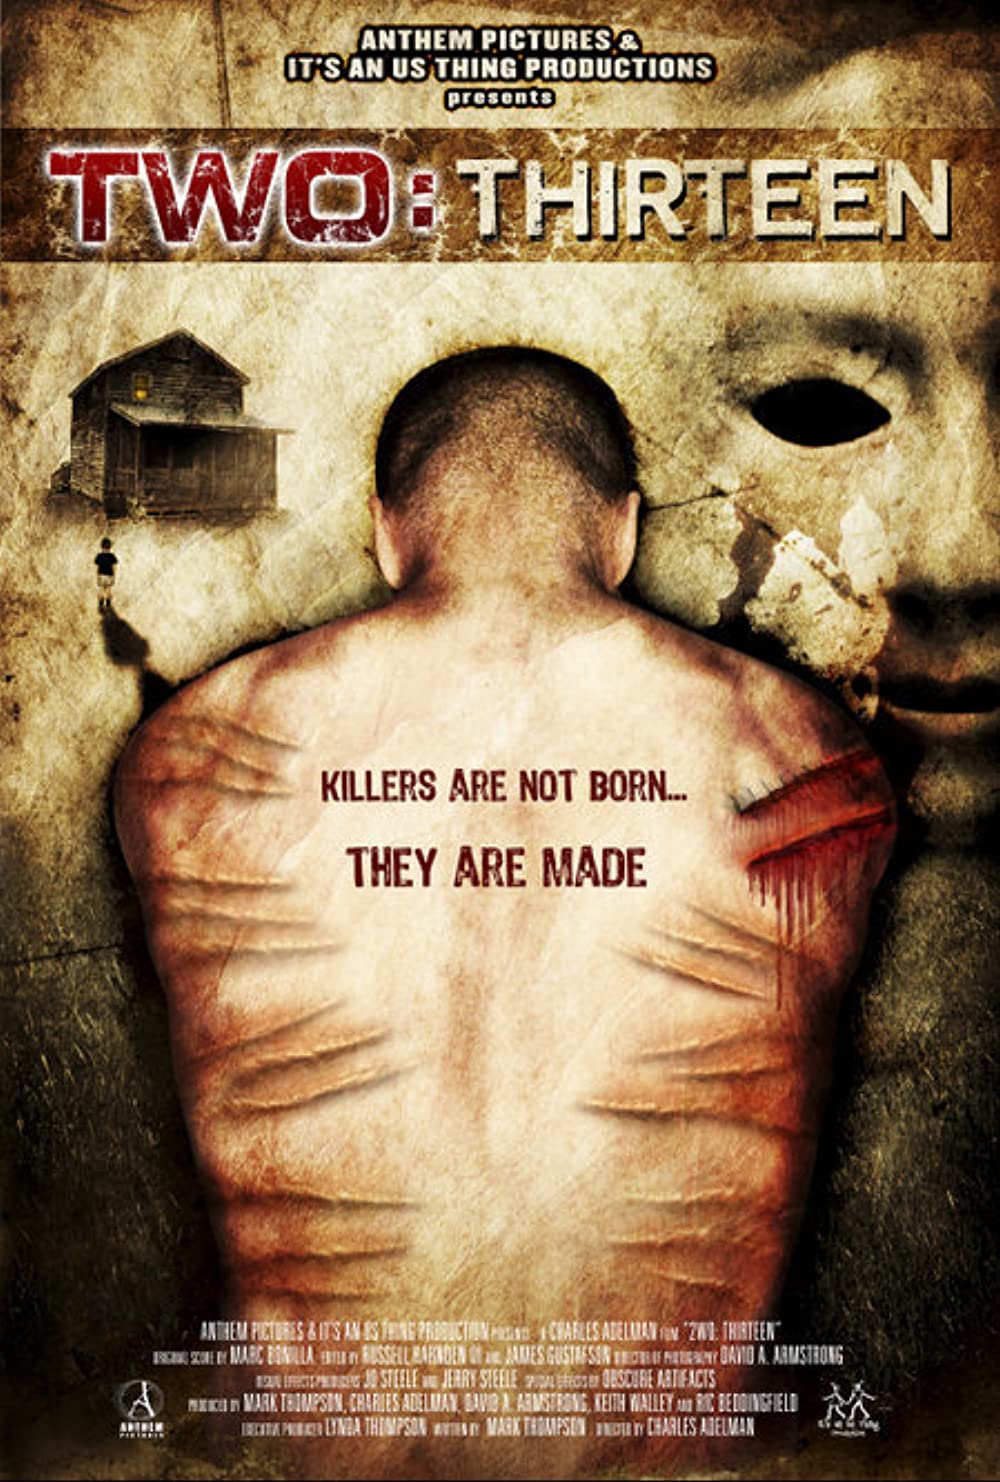 Blood Redemption in DVD - Bloodred Hell - FILMSTARTS.de